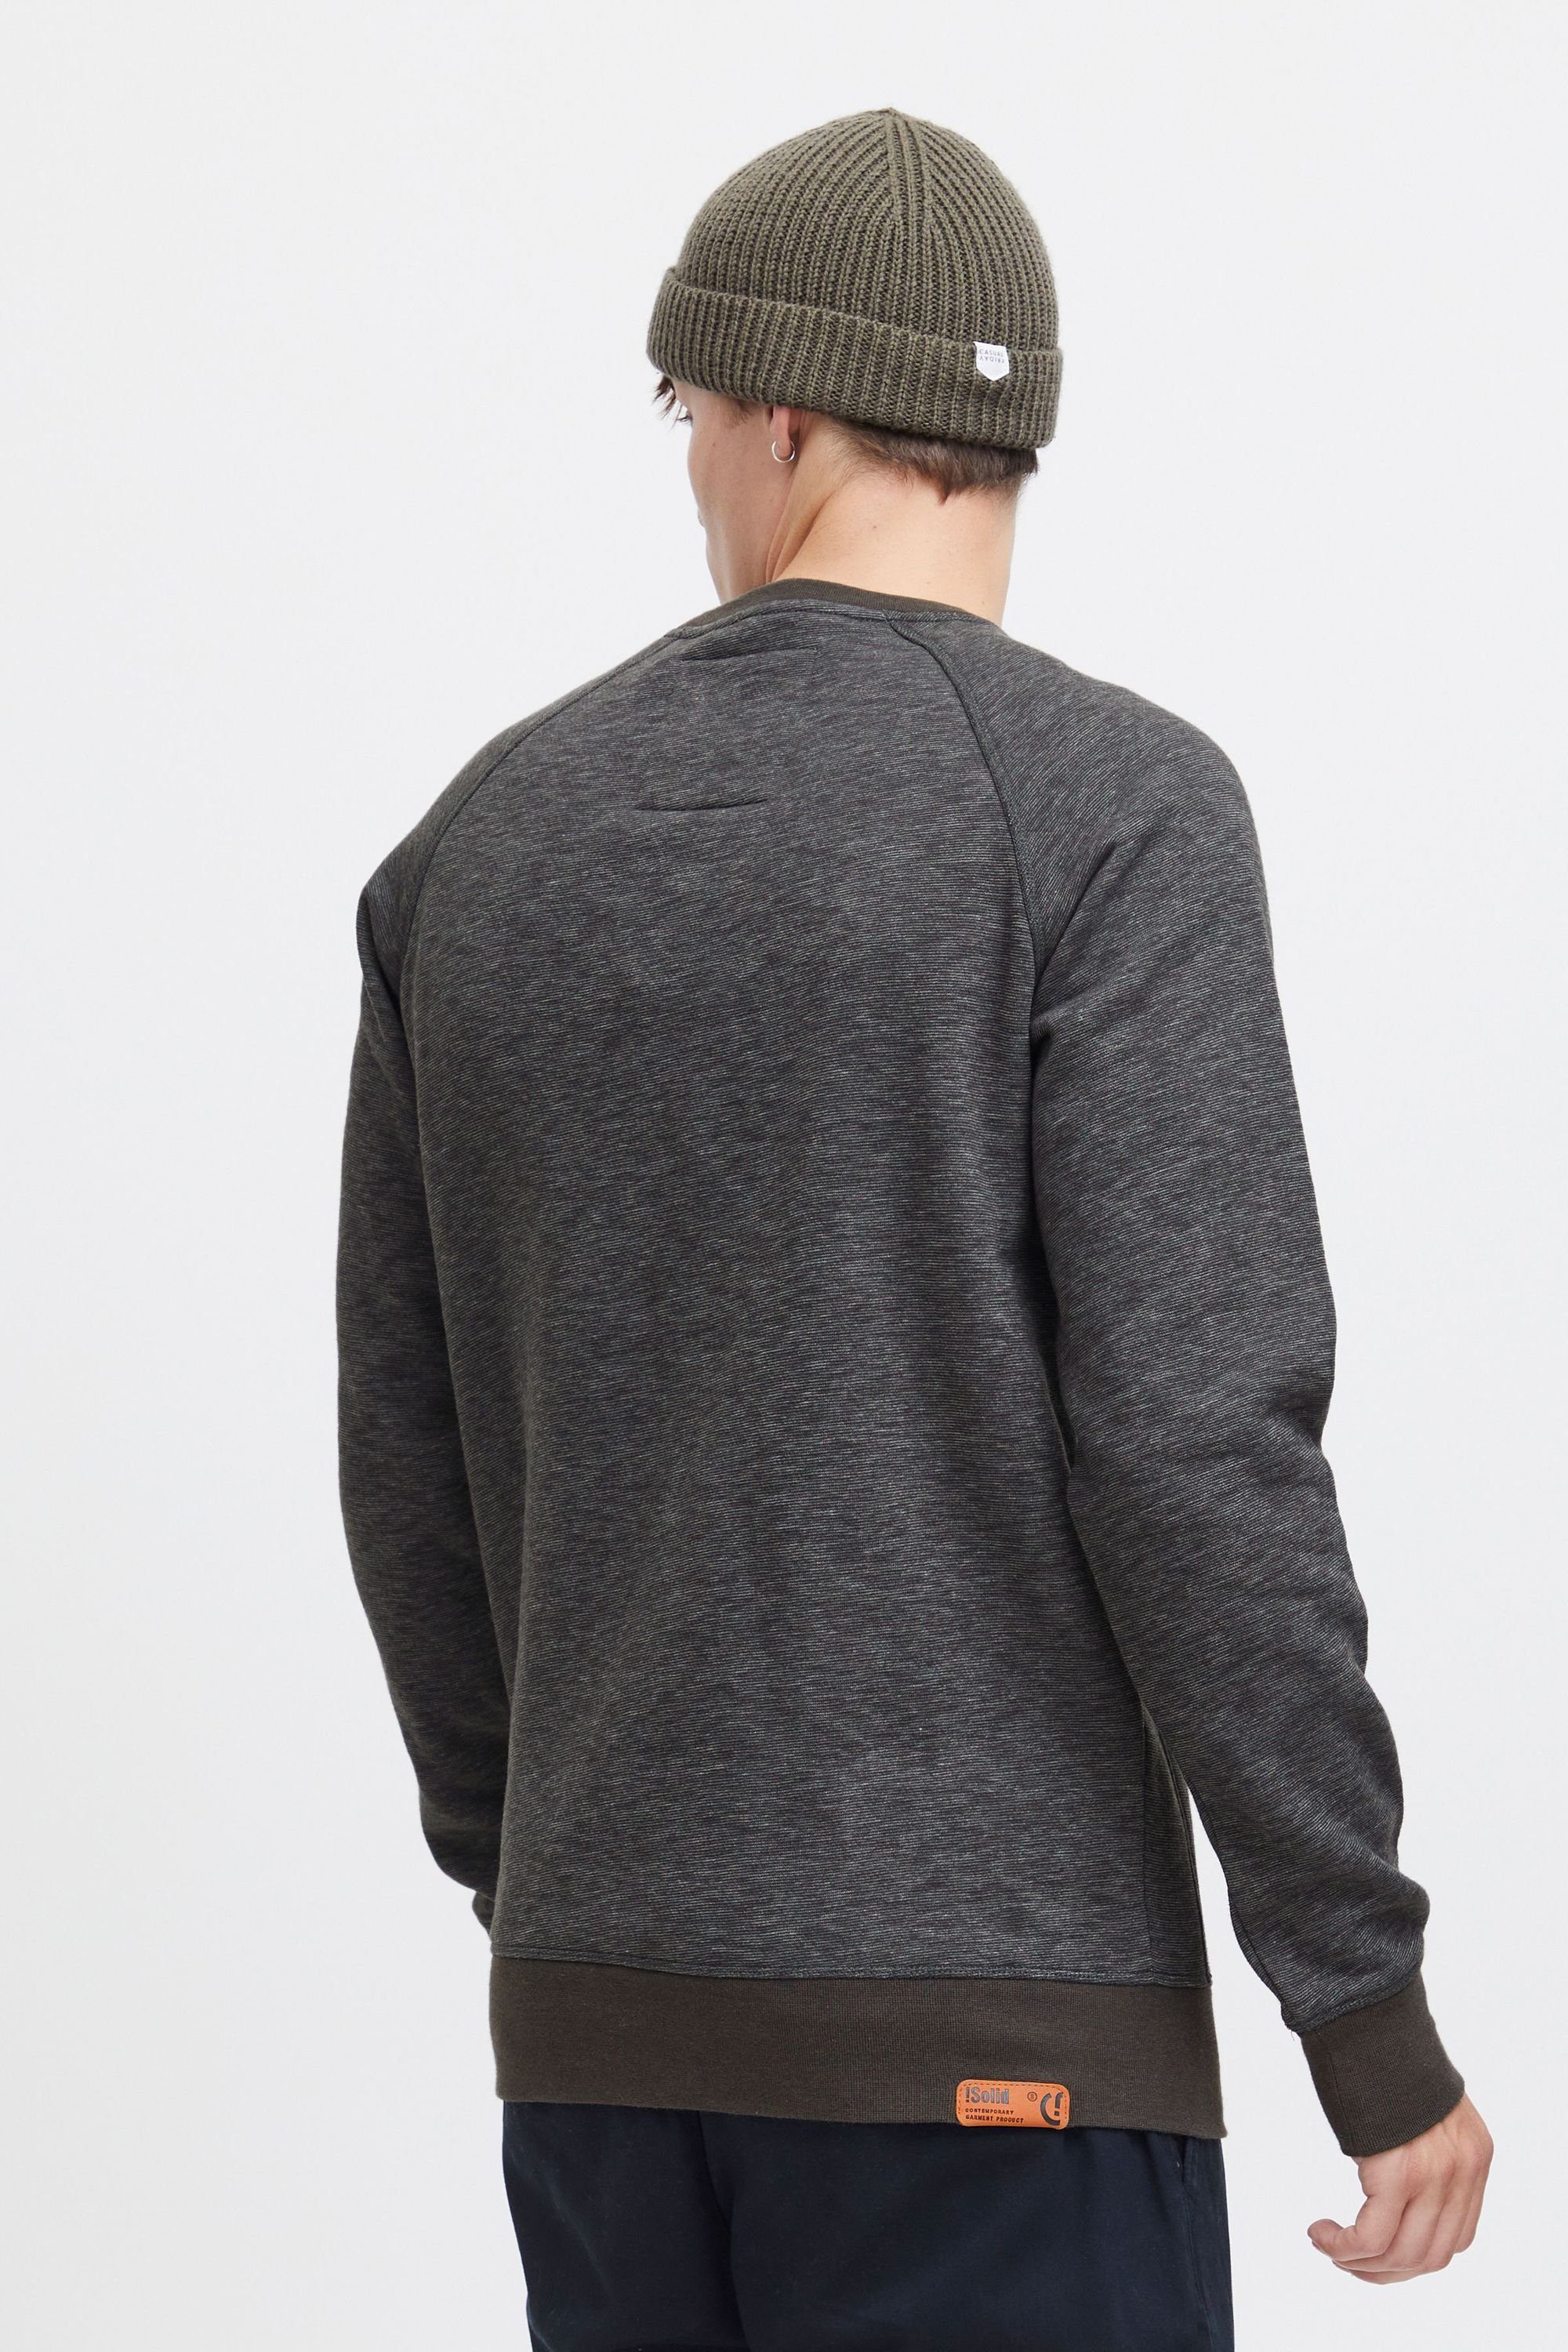 Solid Sweatshirt SDVituNeck Sweatpullover mit Ziernähten Grey dekorativen (8236) Melange